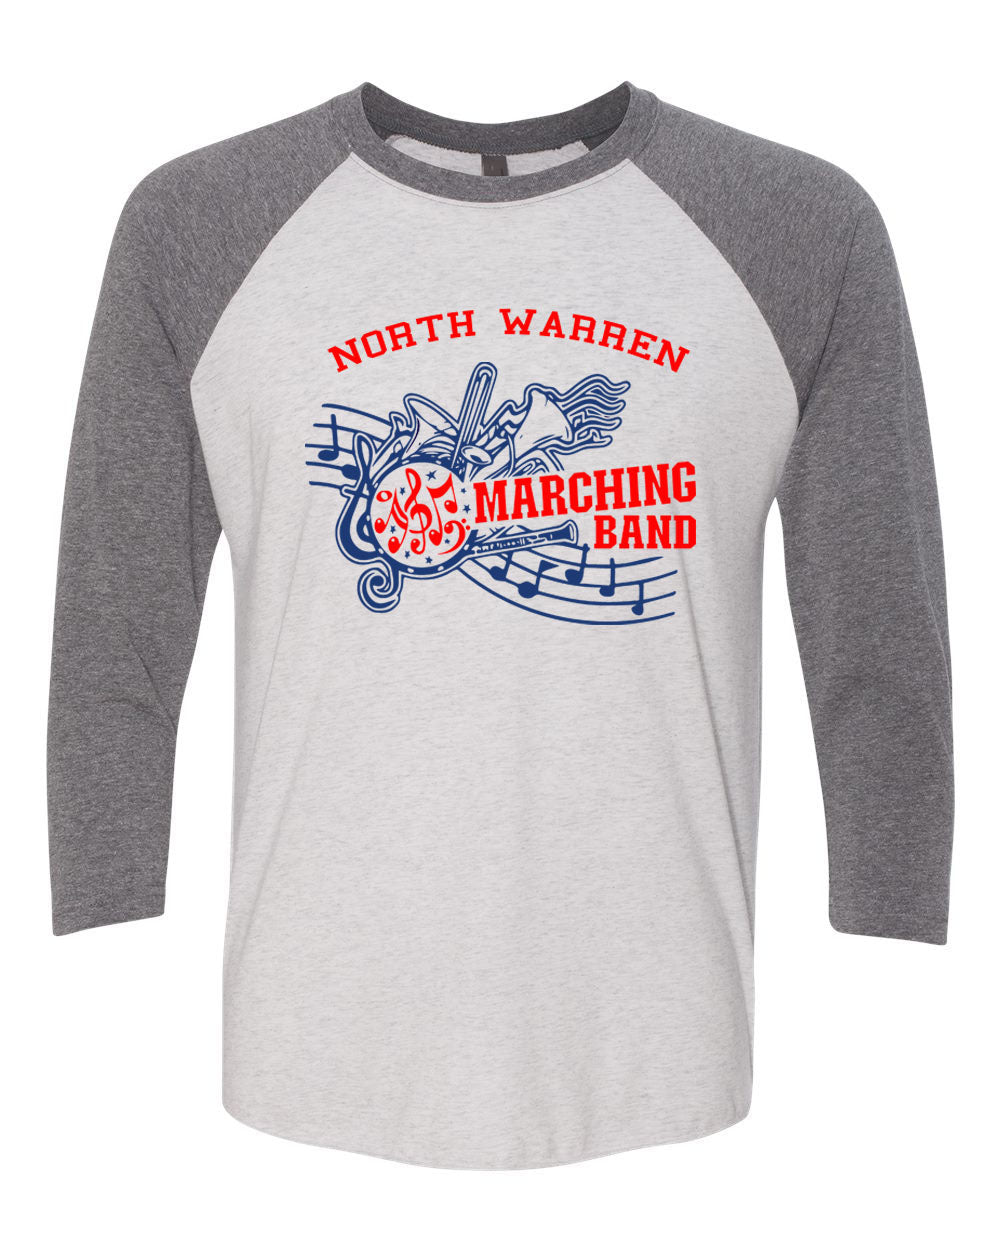 North Warren Marching Band design 1 raglan shirt